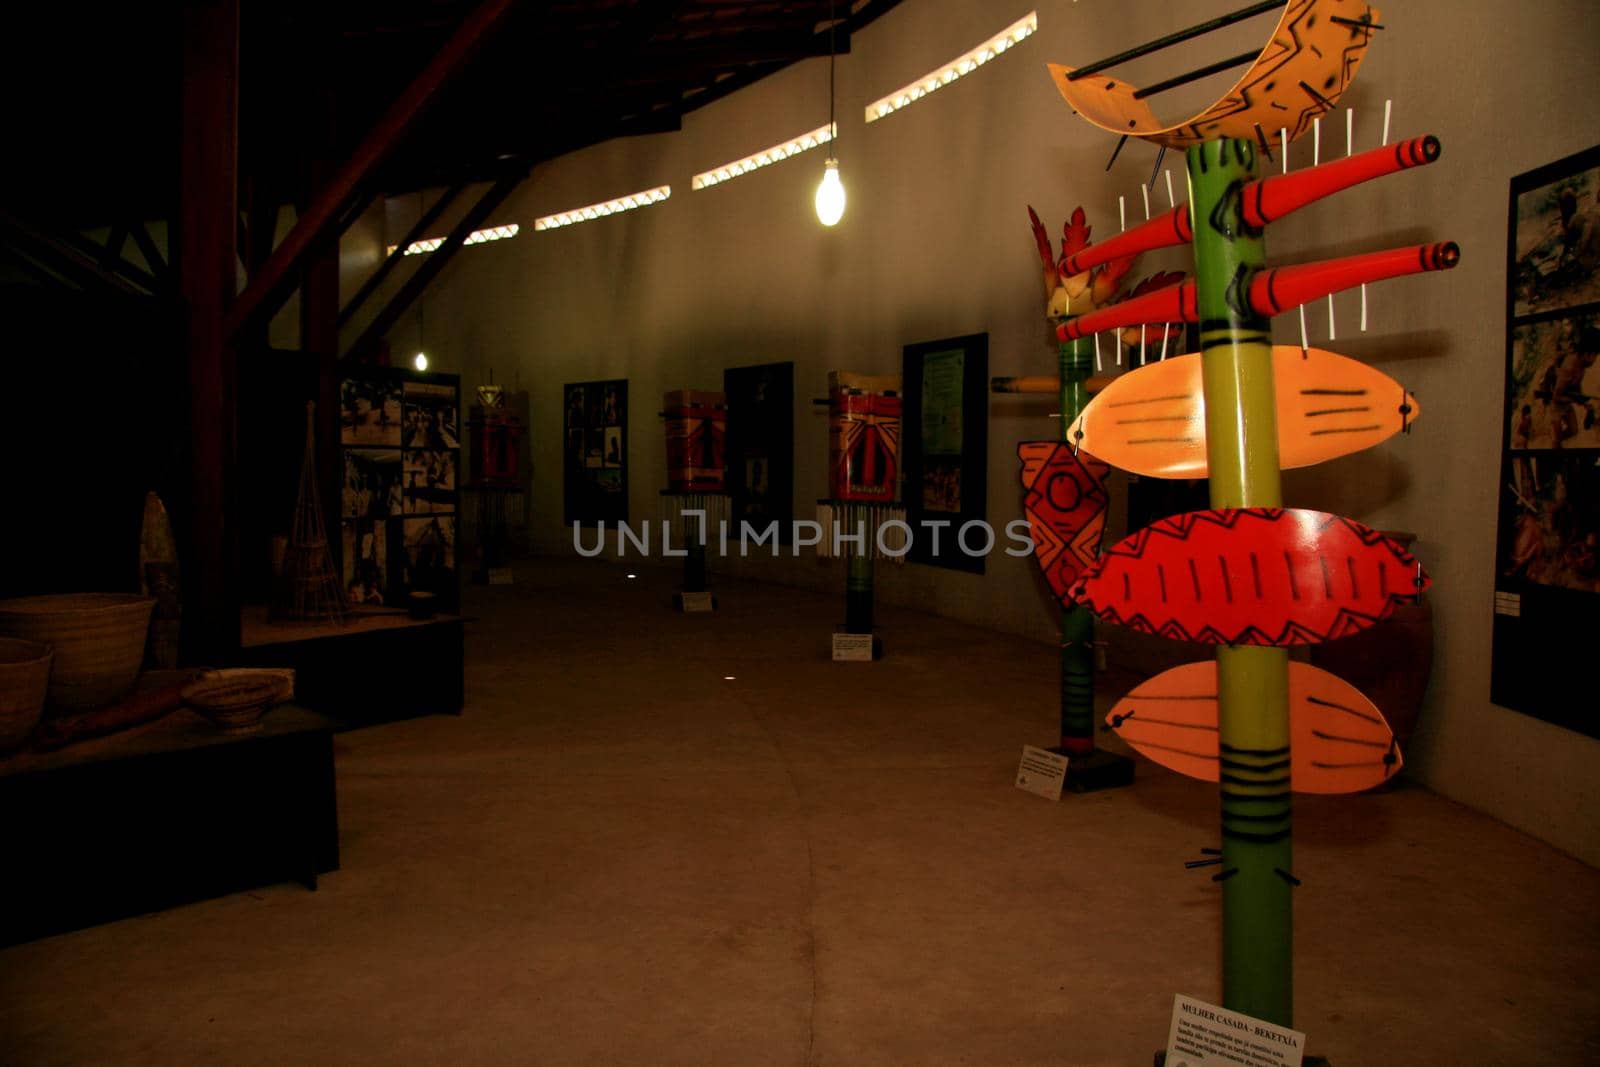 pataxo indigenous museum by joasouza